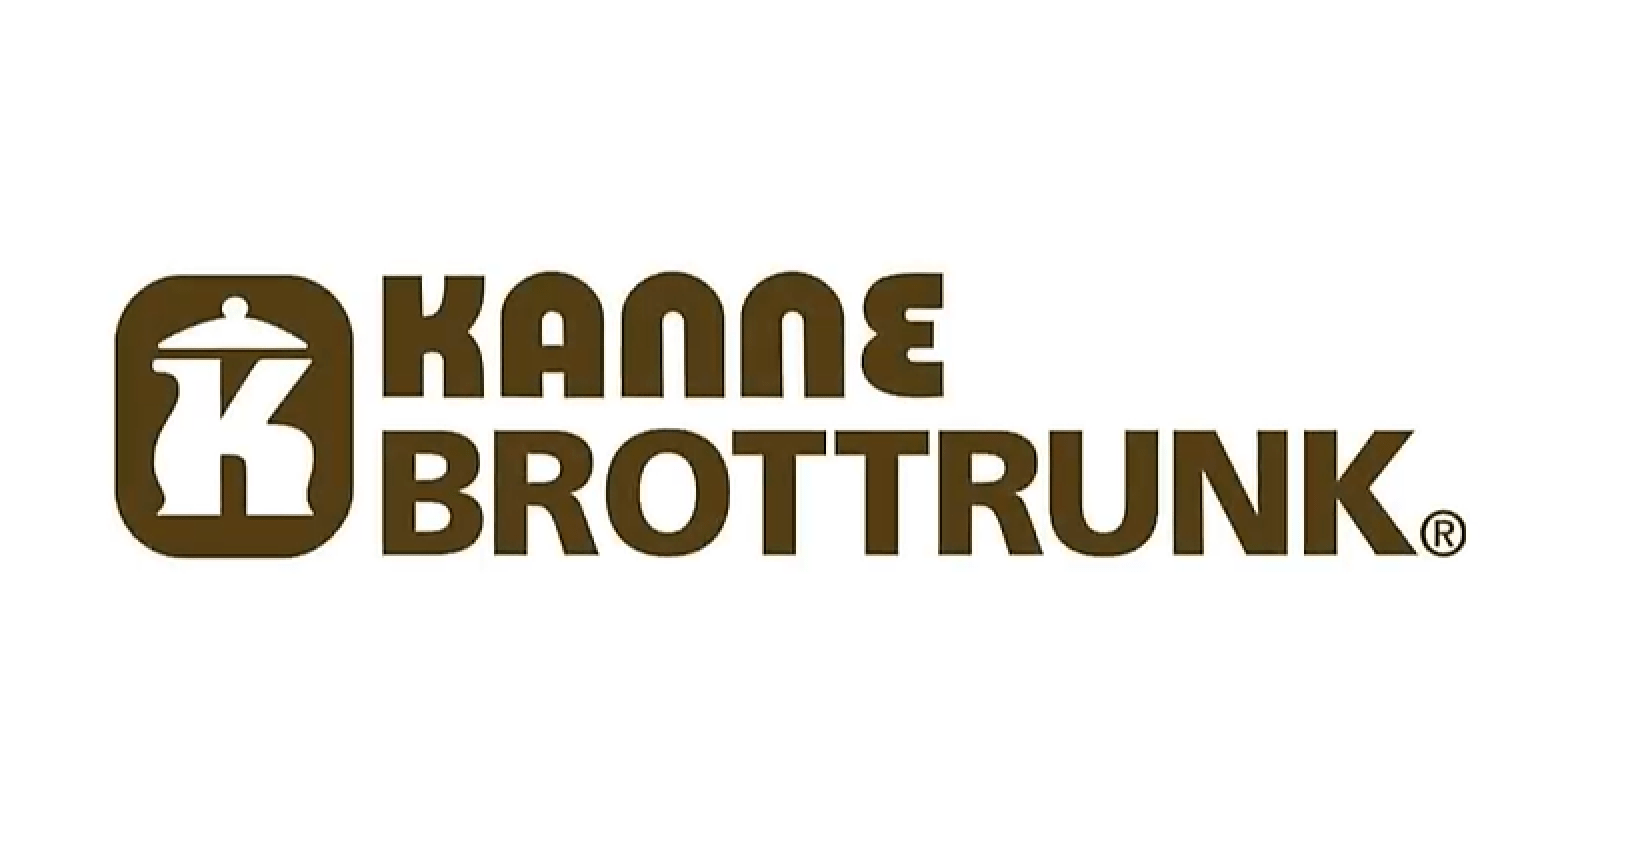 Kanne Brottrunk GmbH & Co. Betriebsgesellschaft KG